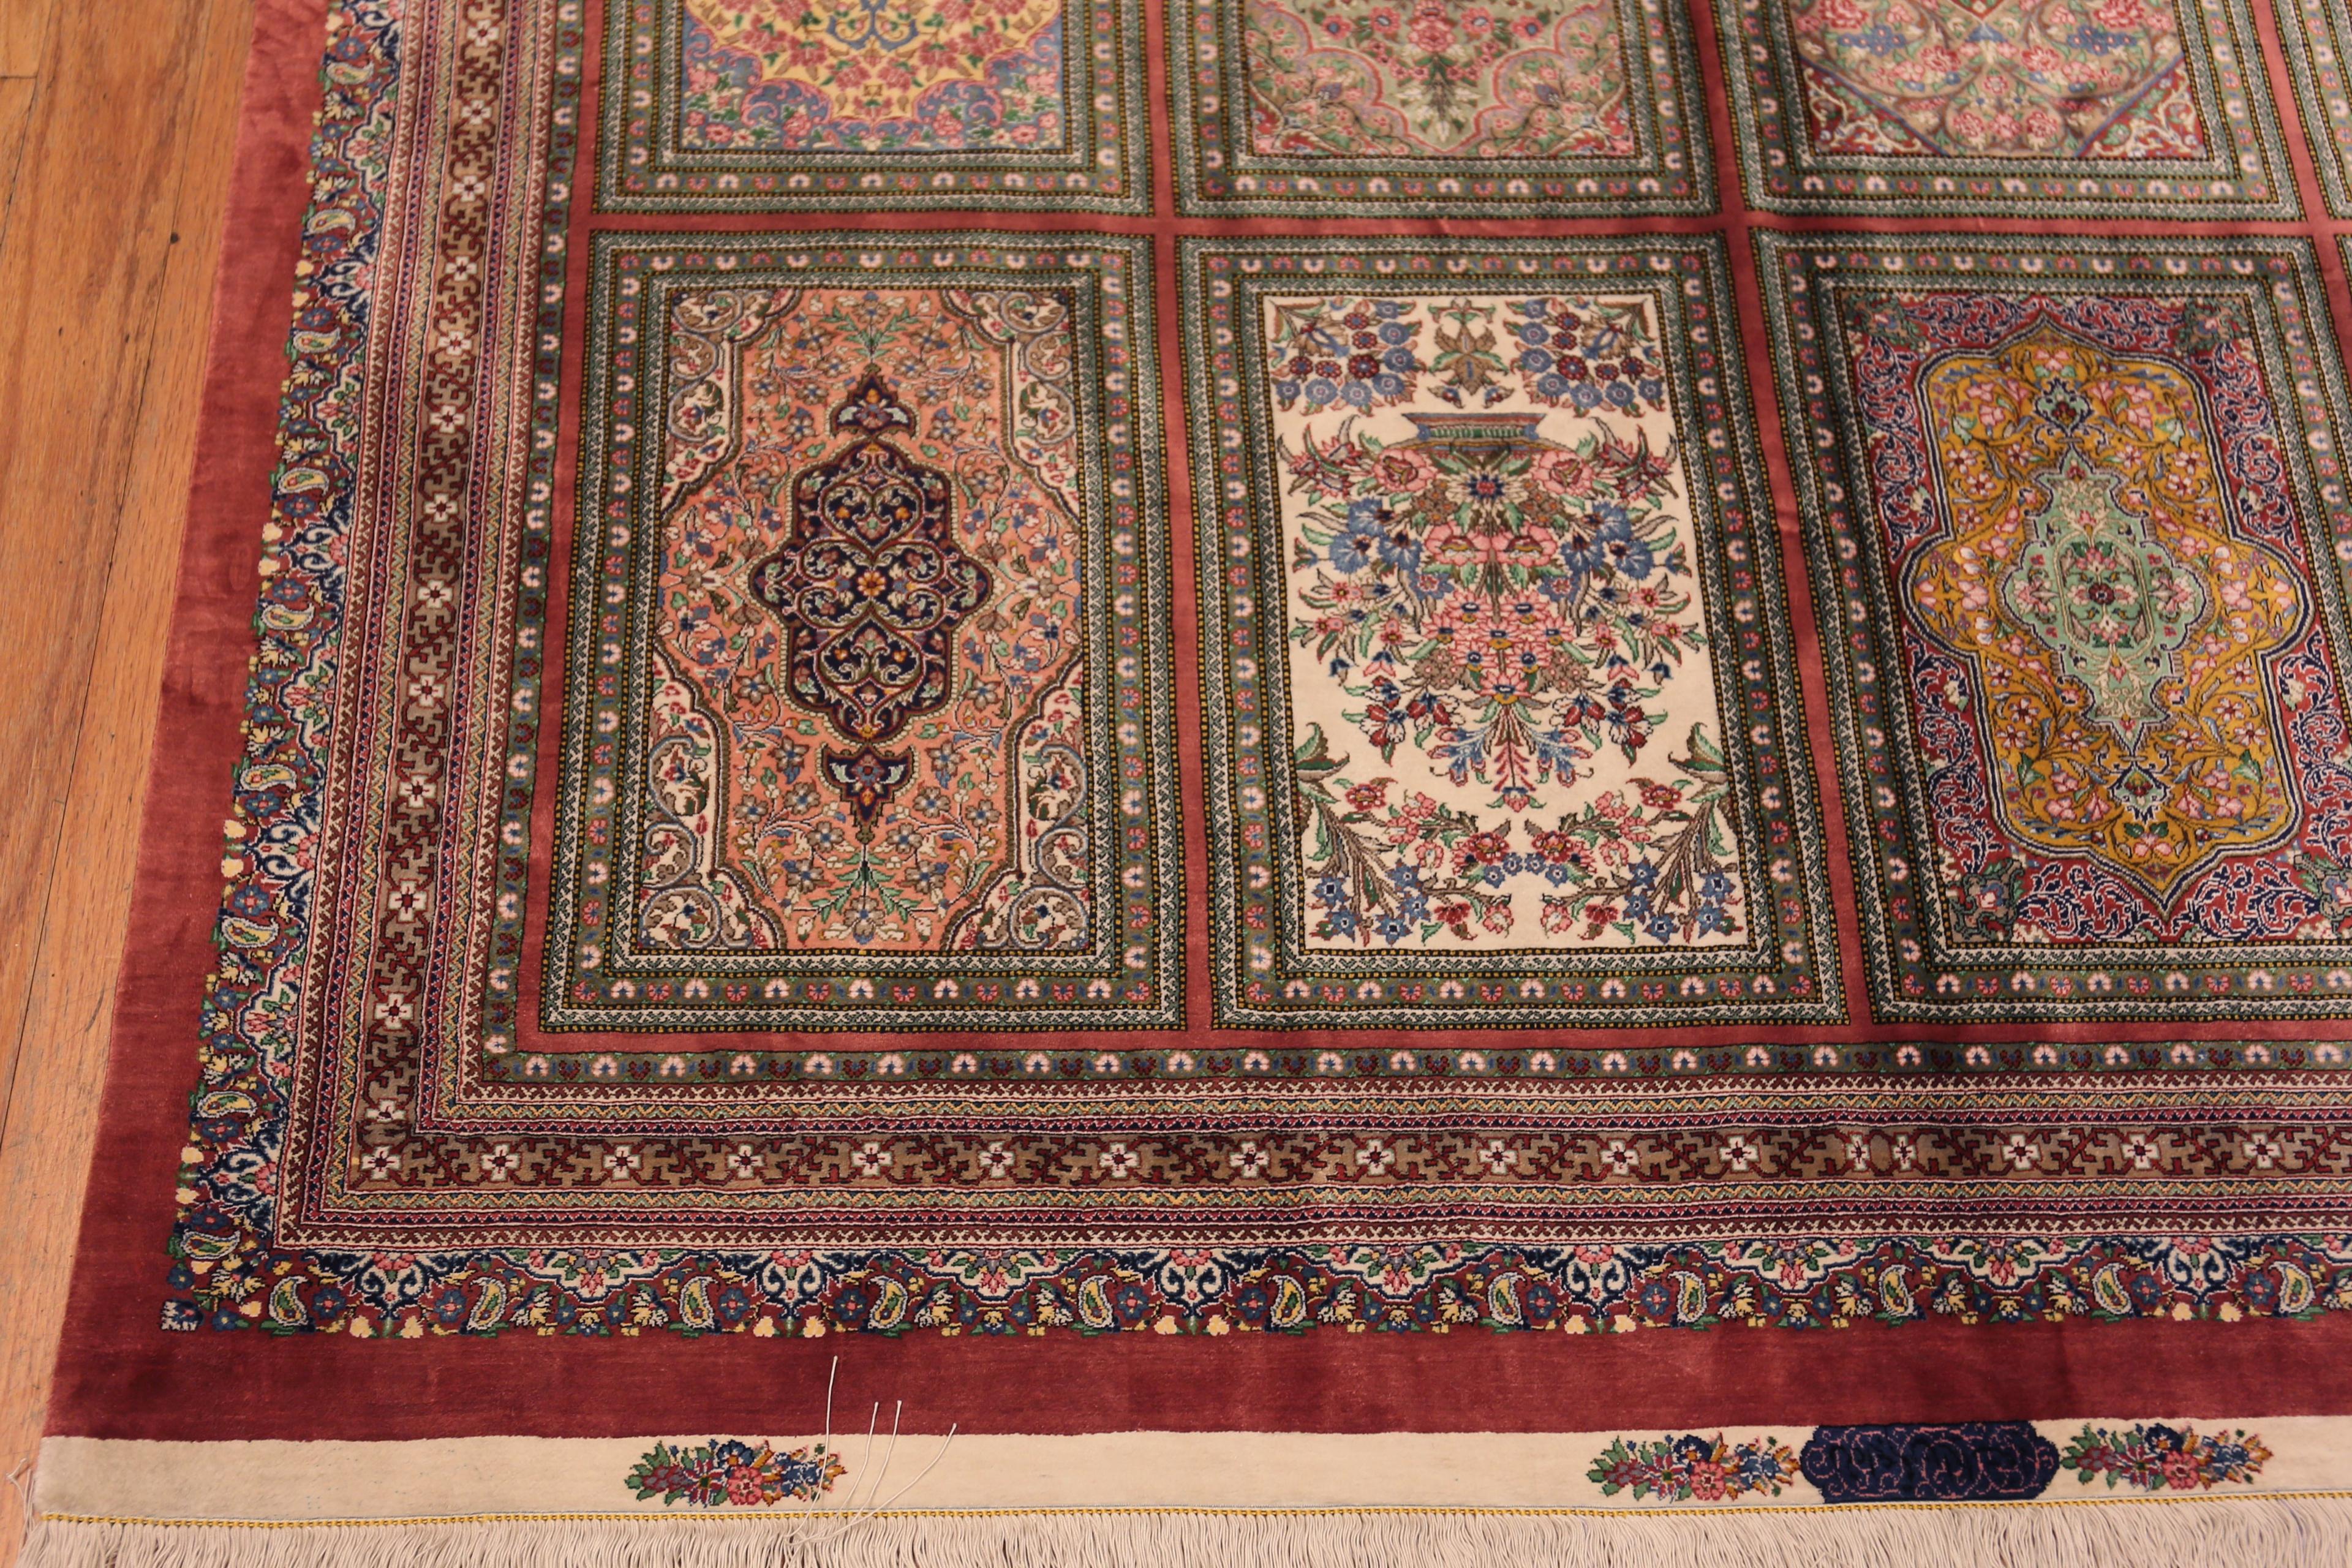 Beautiful Fine Floral Long Narrow Gallery Size Vintage Luxury Persian Silk Qum Rug, country of origin: Persian Rugs, Circa date: Vintage 